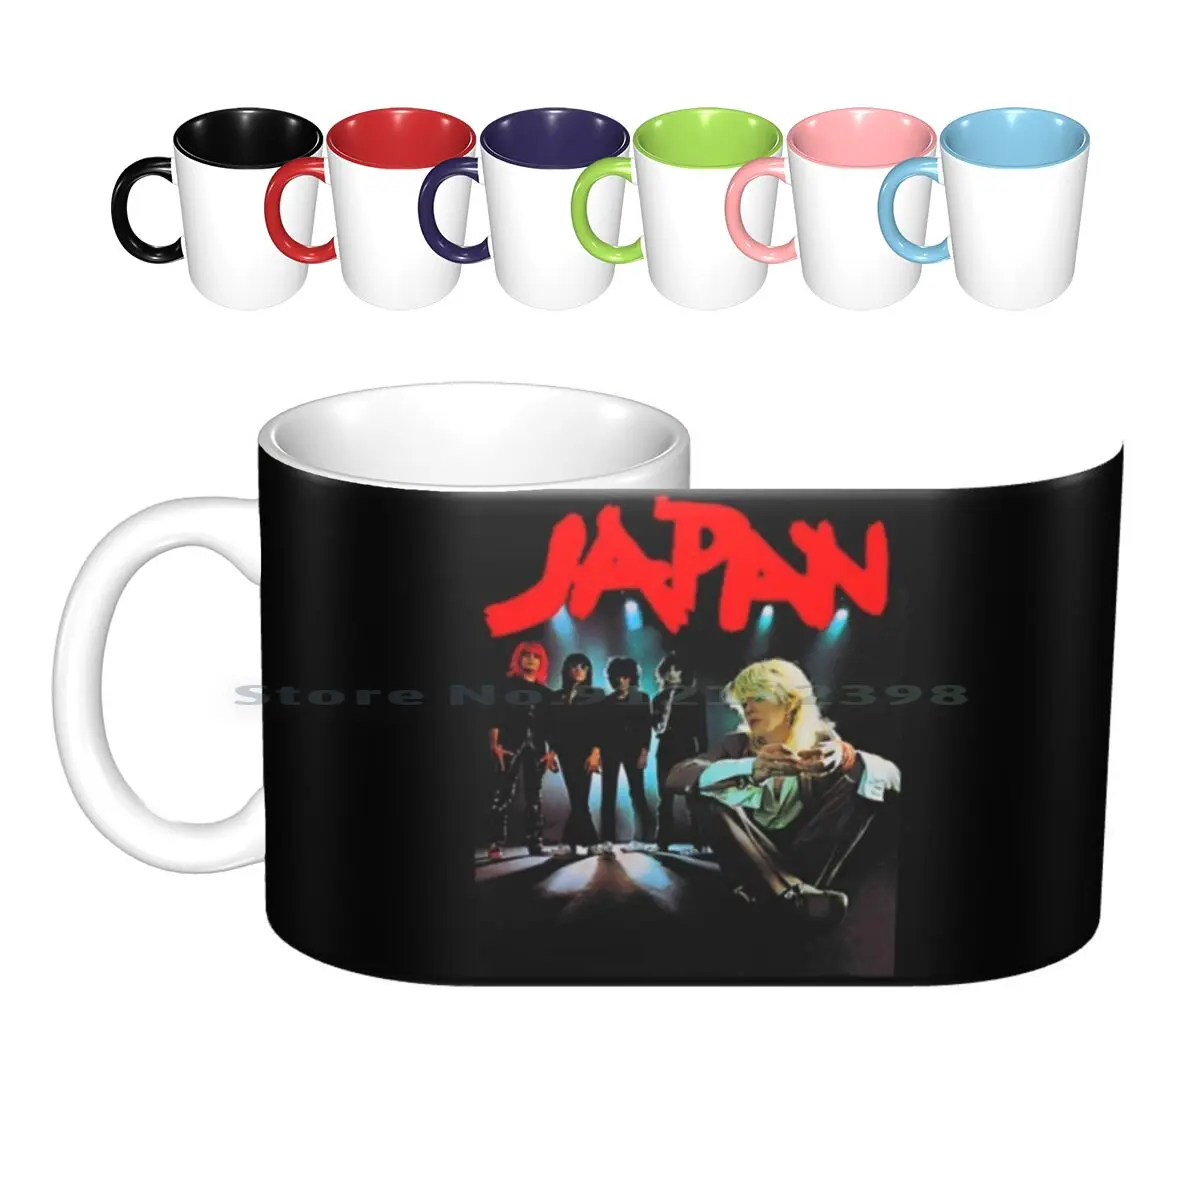 

Japan-Band Ceramic Mugs Coffee Cups Milk Tea Mug Japan Synthpop New Wave 1980s 80s London Uk England Band Creative Trending